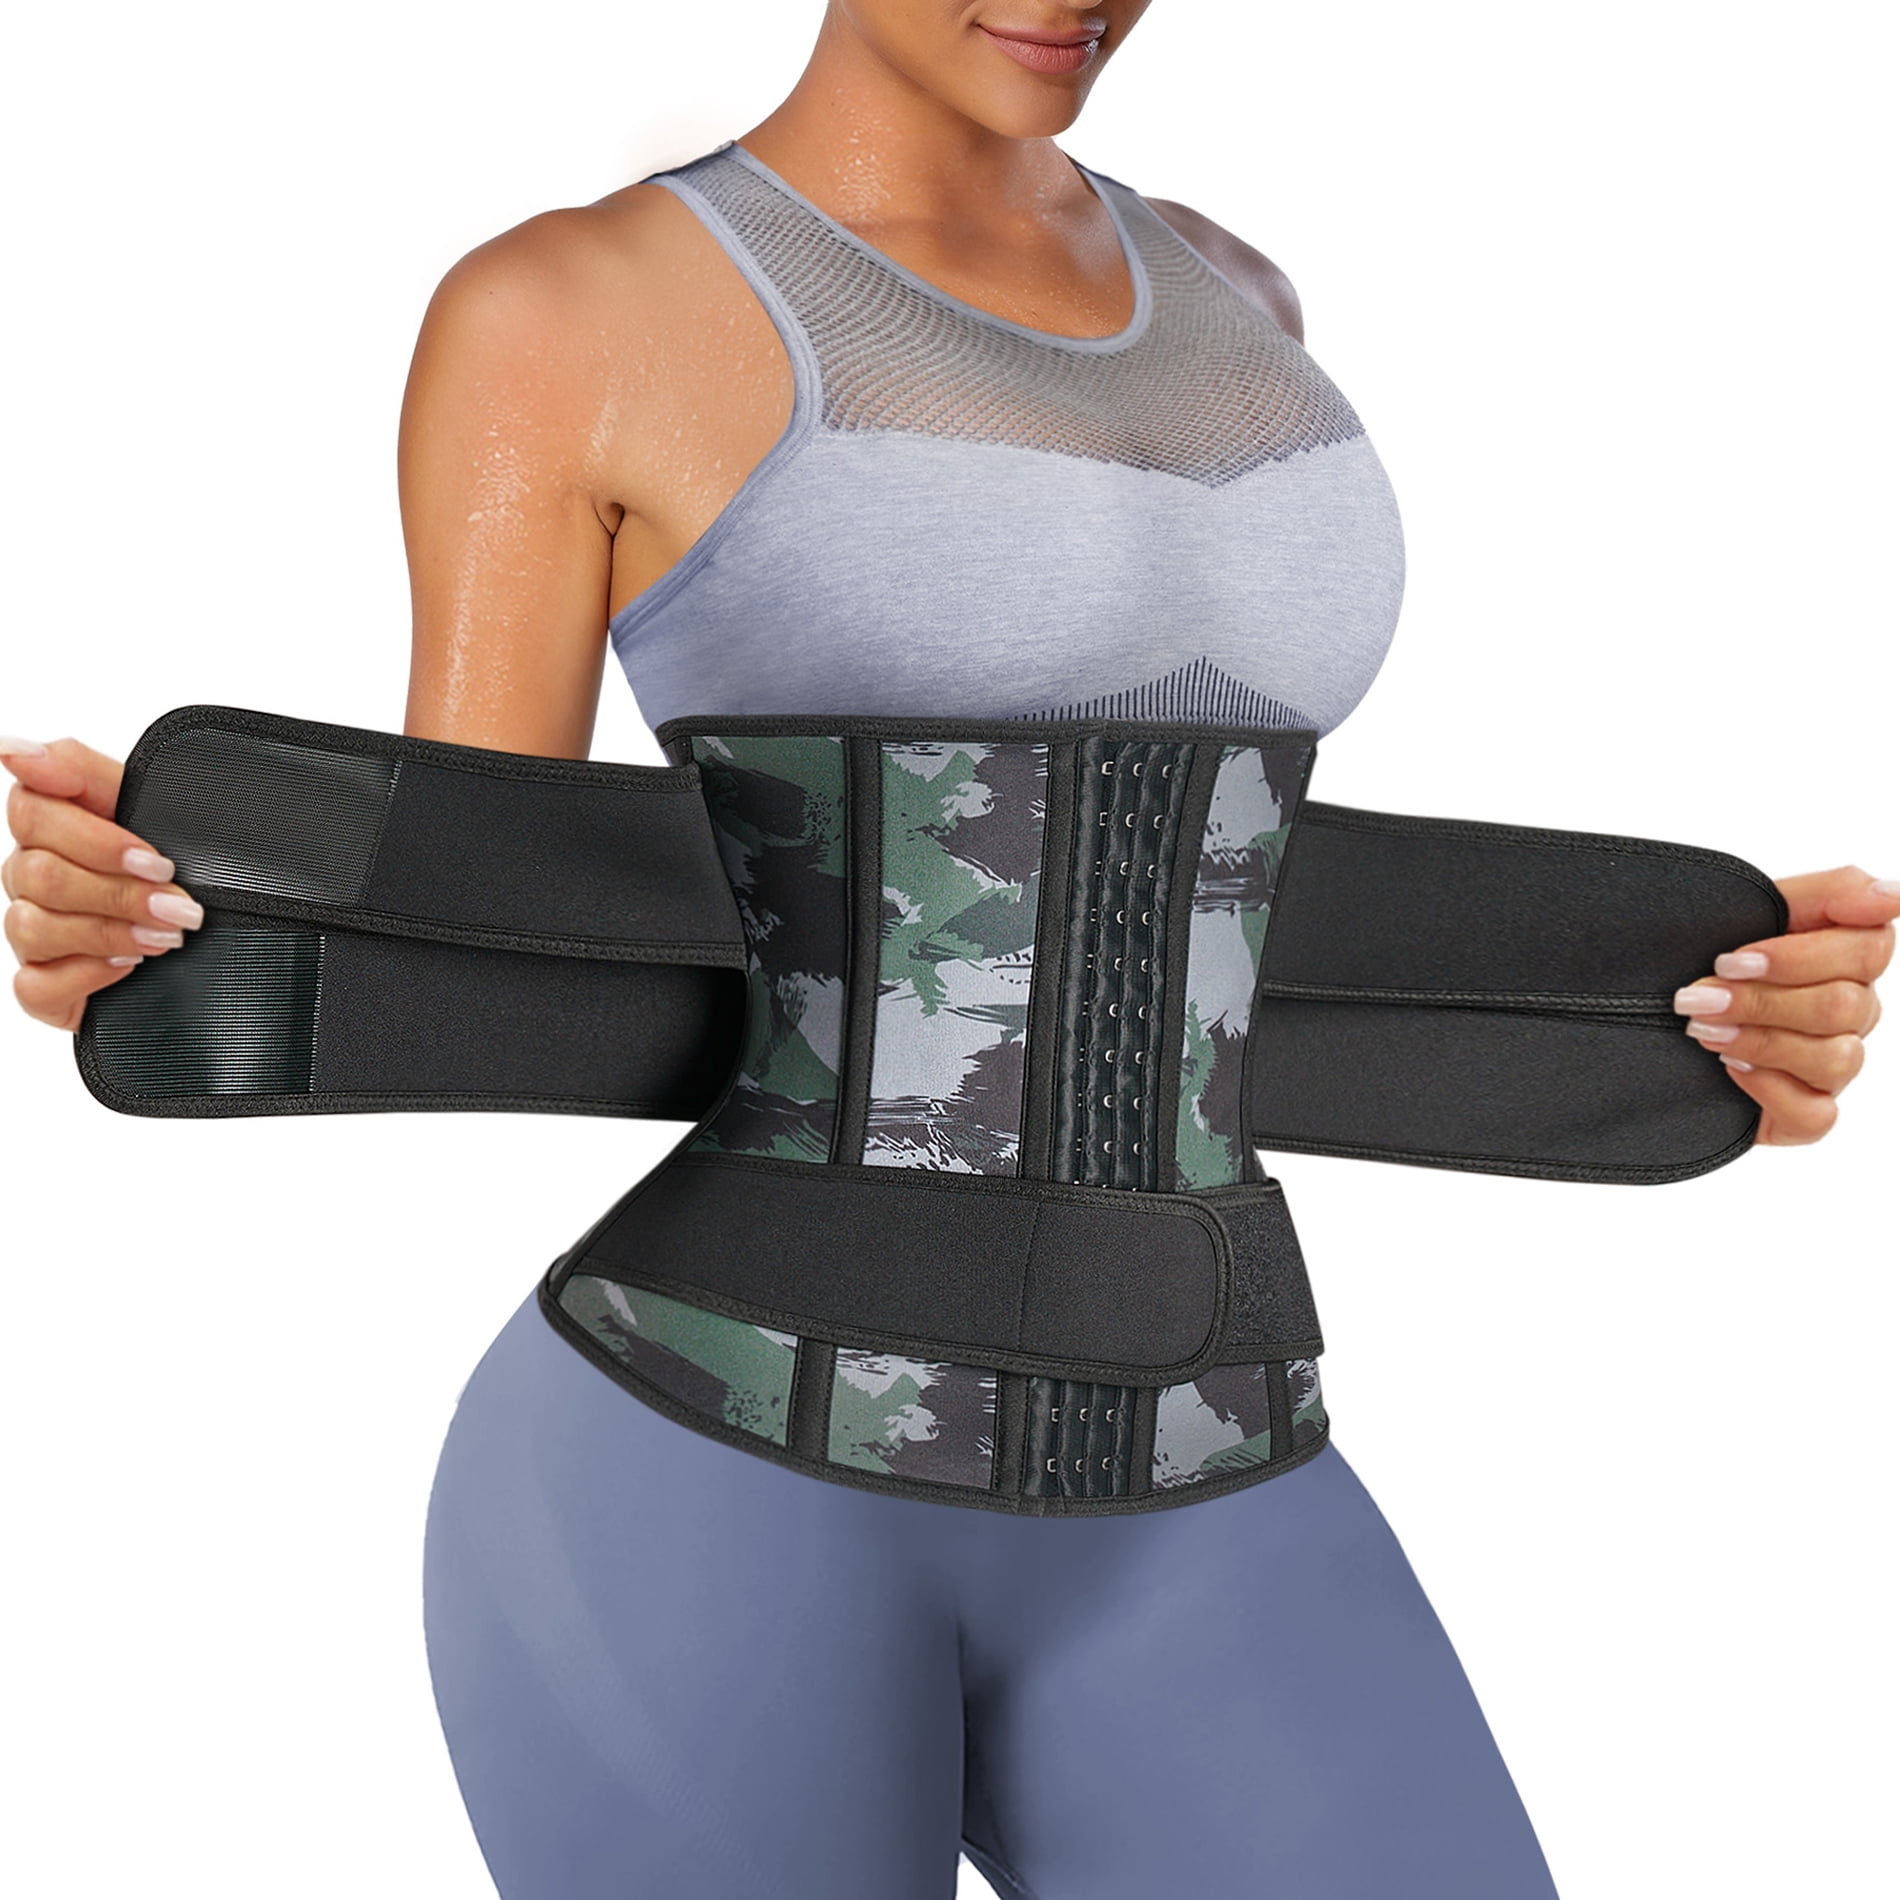 Breathable Sweat Belt Waist Cincher Trimmer Body Shaper Girdle Fat Burn Belly Slimming Band for Weight Loss Fitness Workout Waist Trainer Belt for Women 